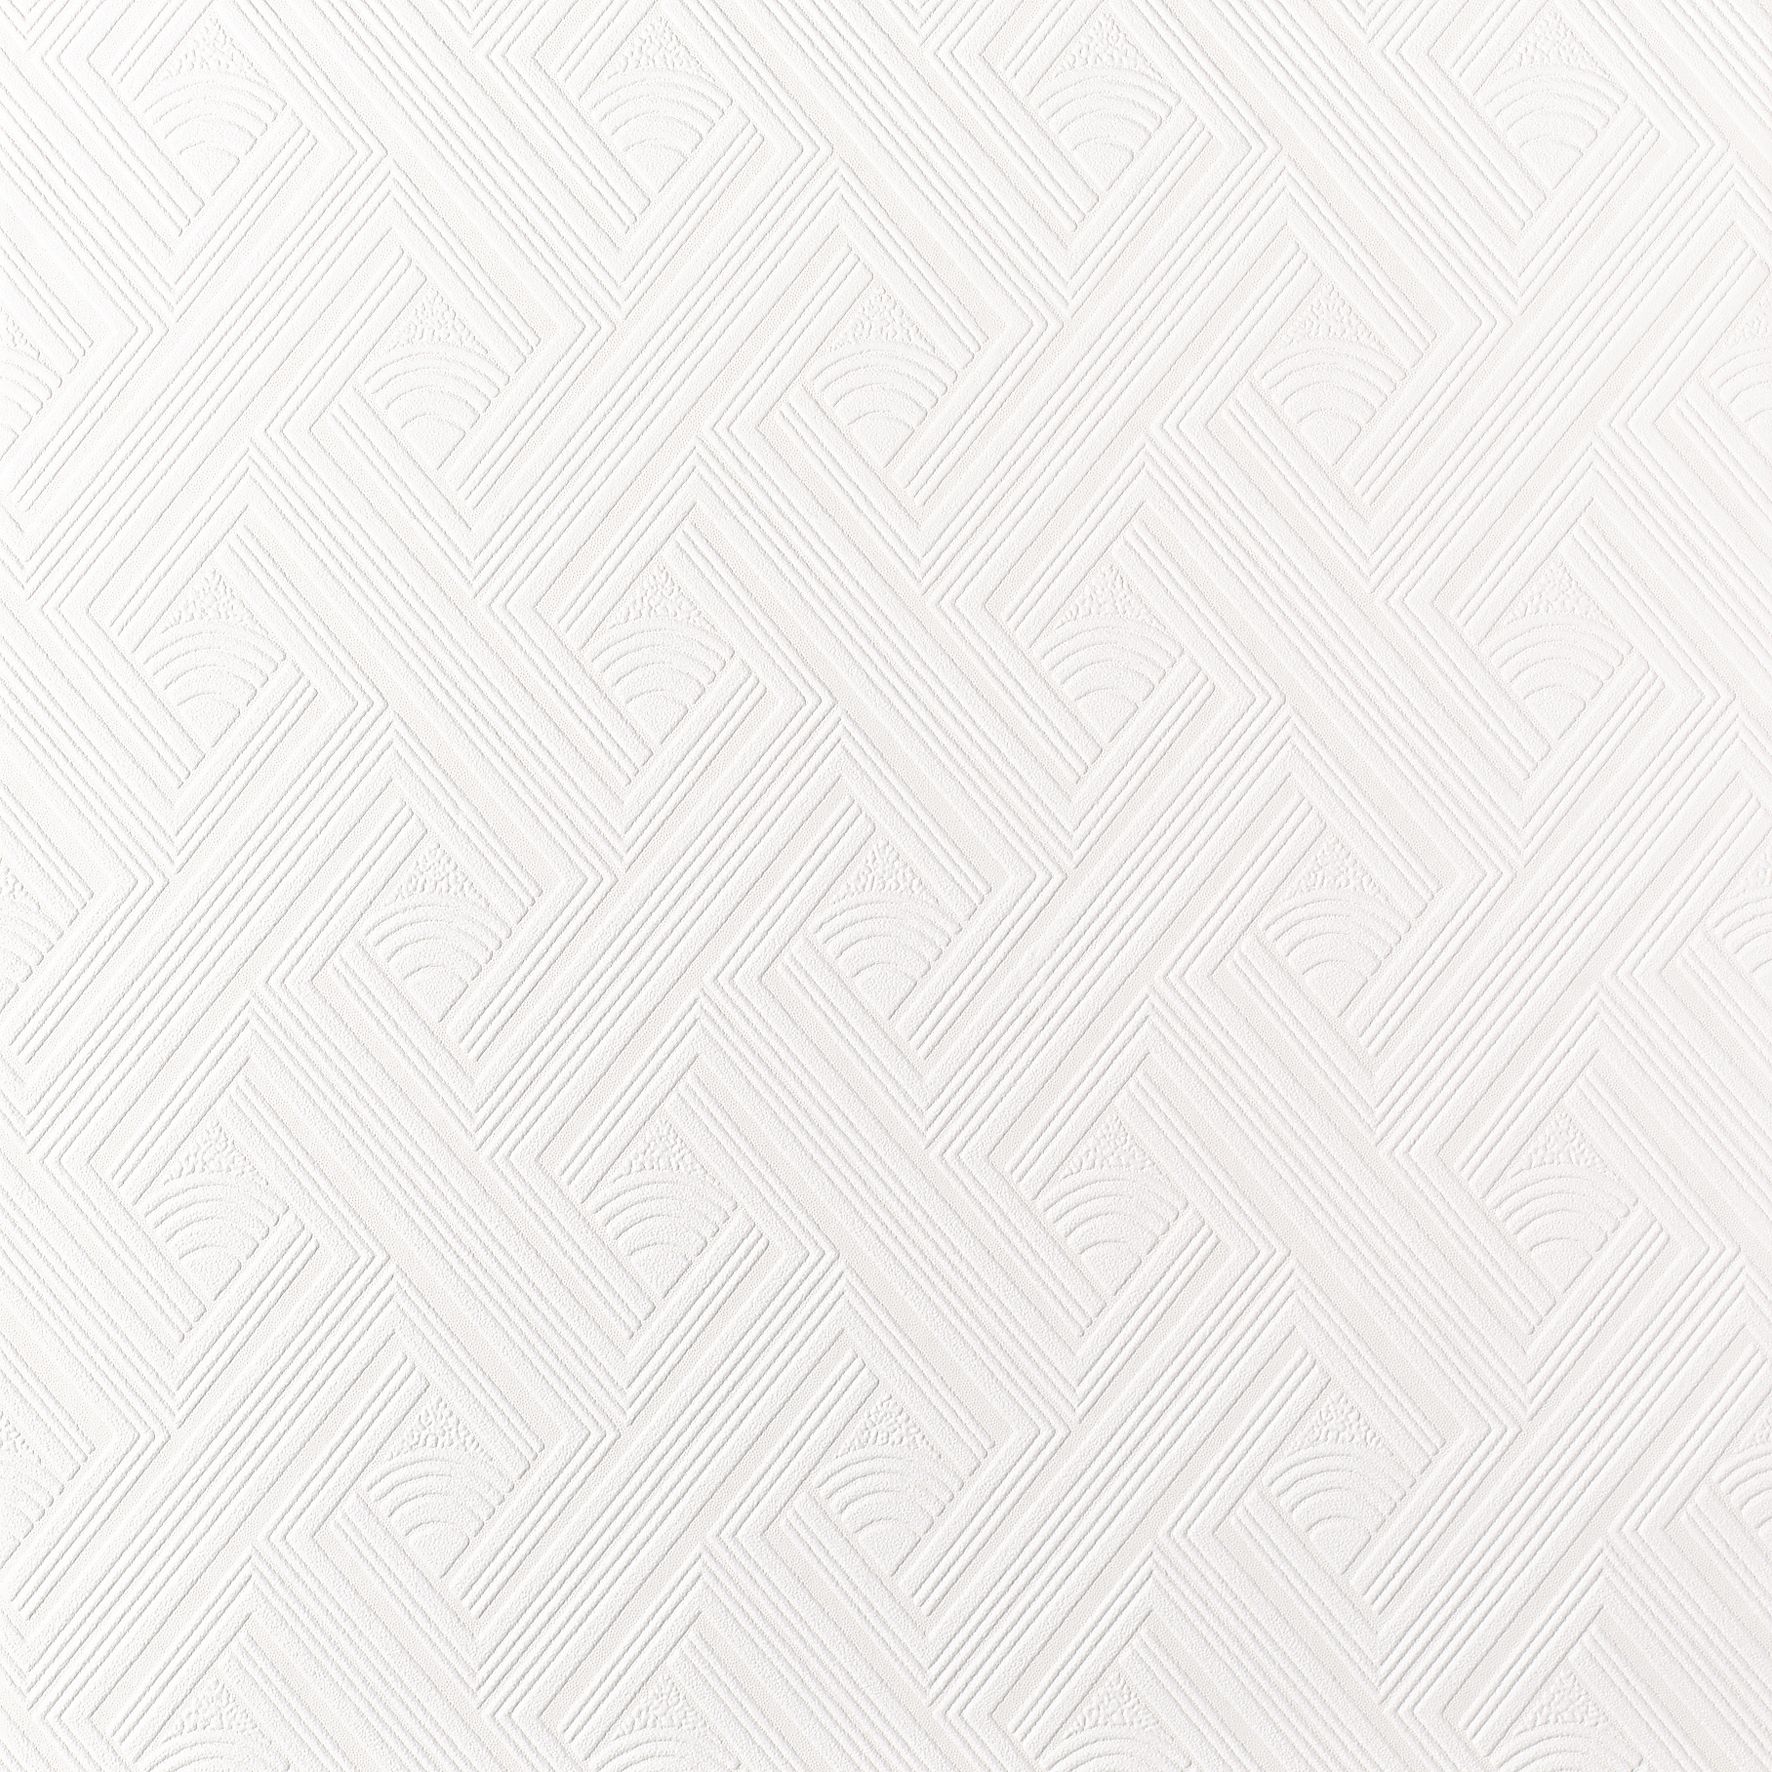 Superfresco White Diagonal fan Textured Wallpaper